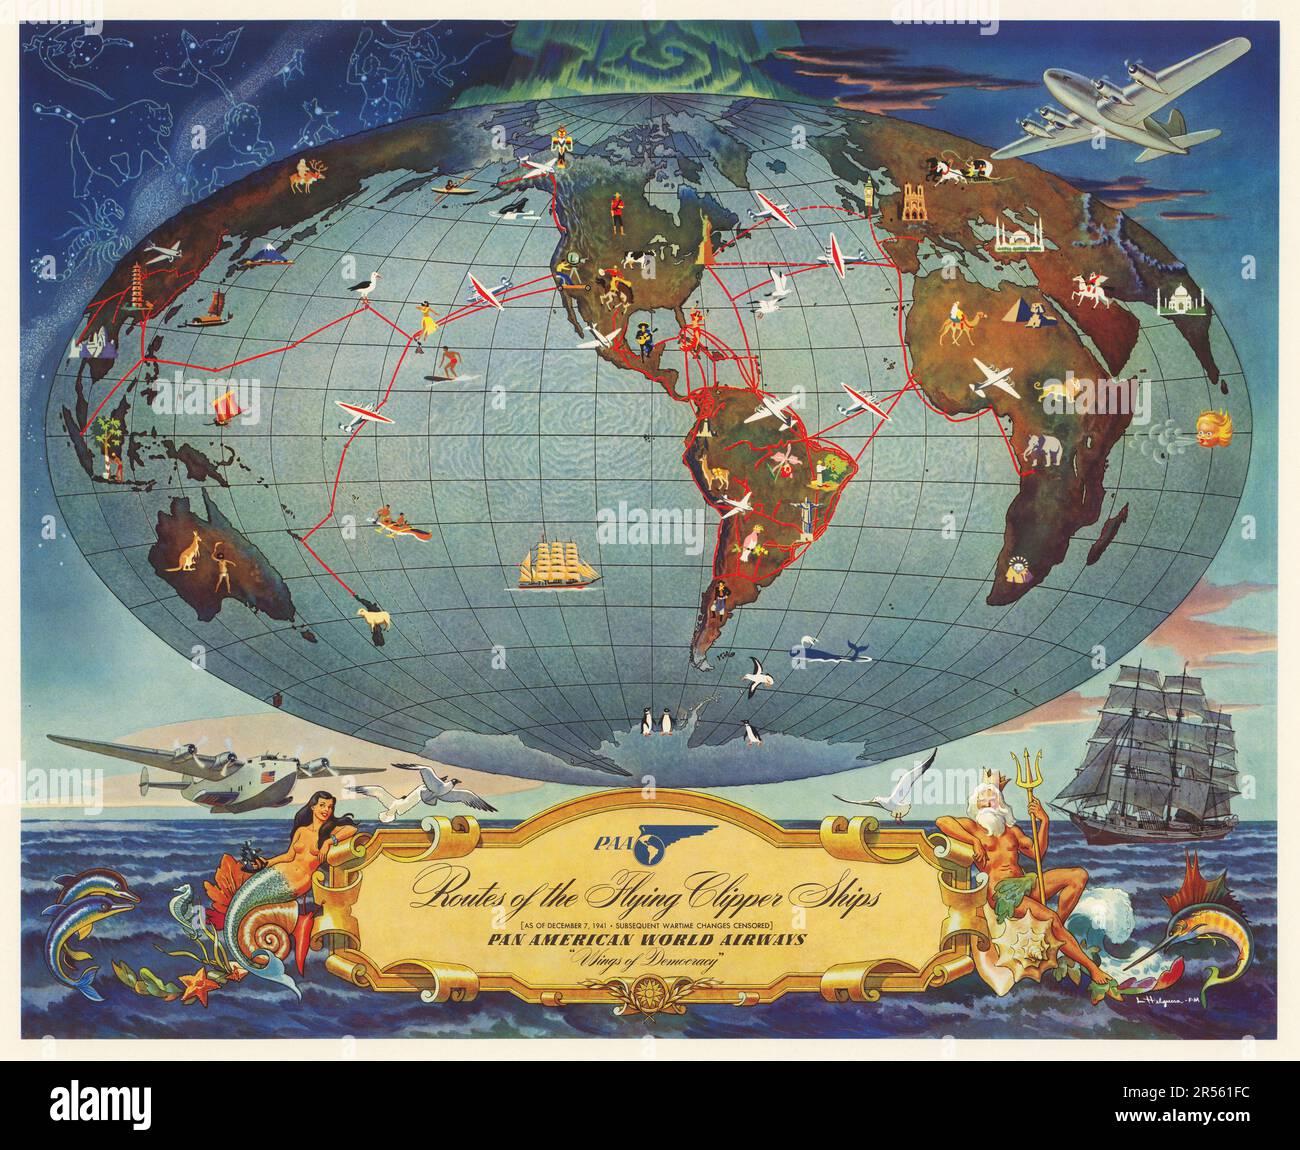 Pan American Poster 1941, Routes of the Flying Clipper Ships. Dekorative Weltkarte mit Flugstrecken von Pan am - Helgura-Kunstwerken Stockfoto